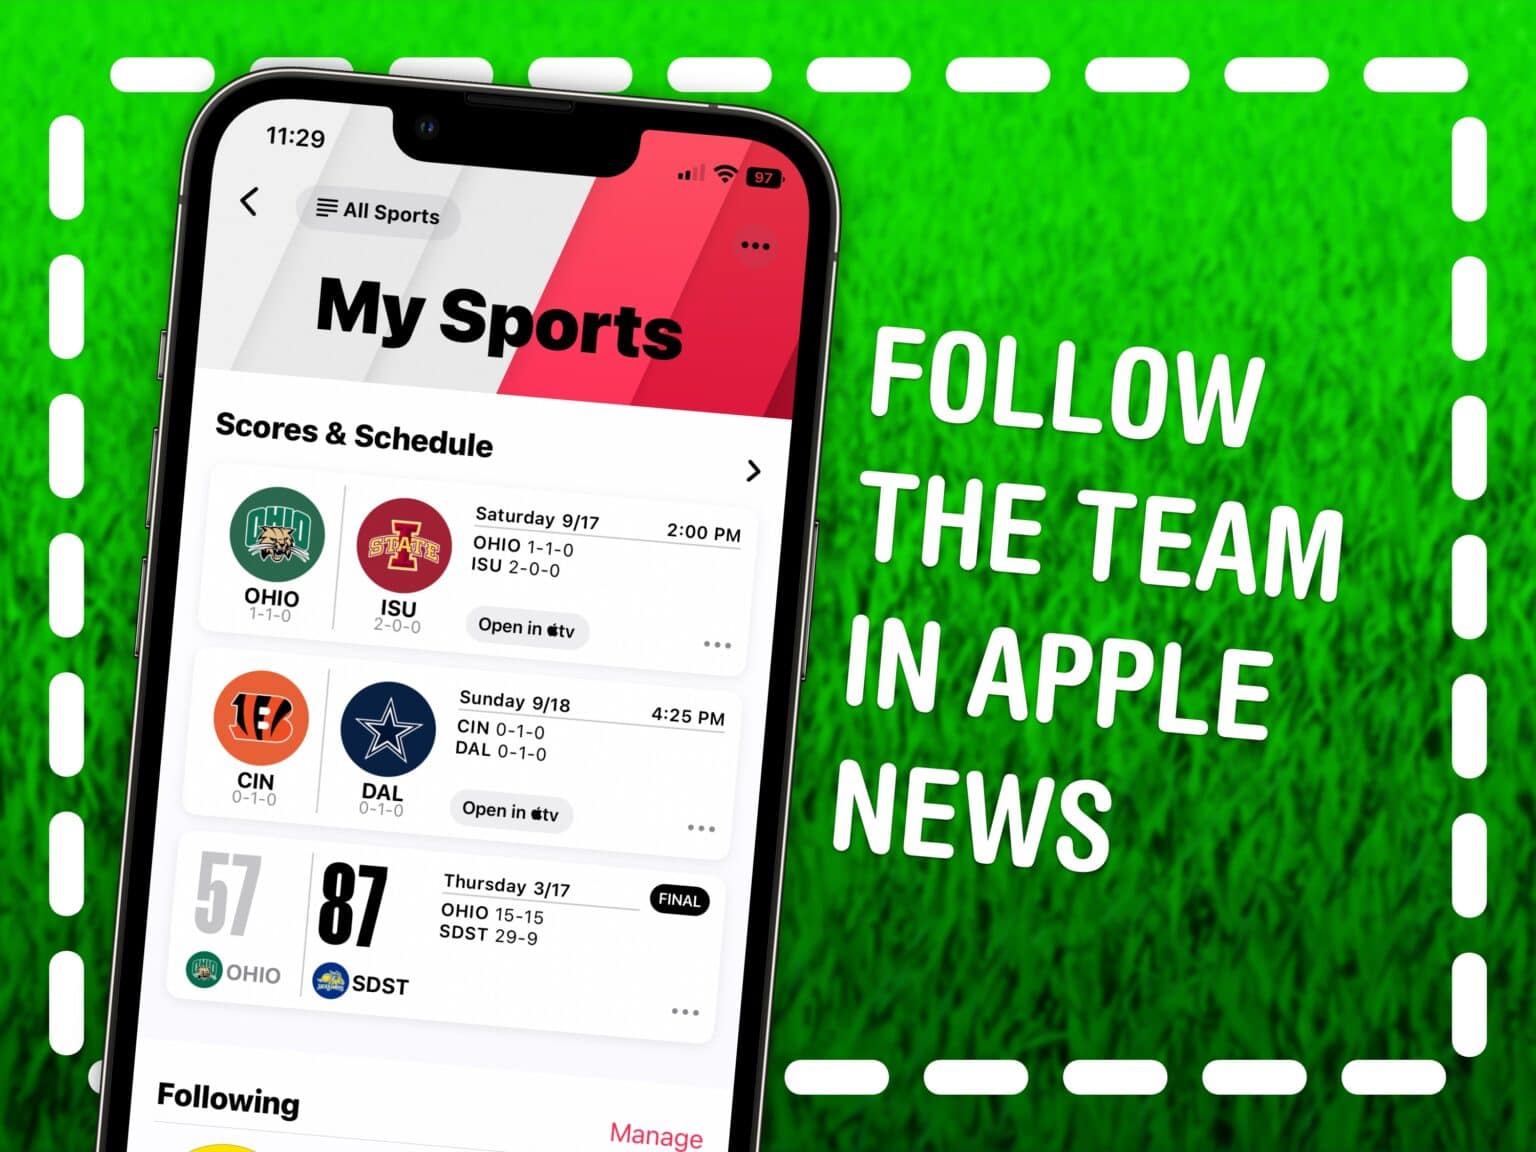 Follow the team in Apple News